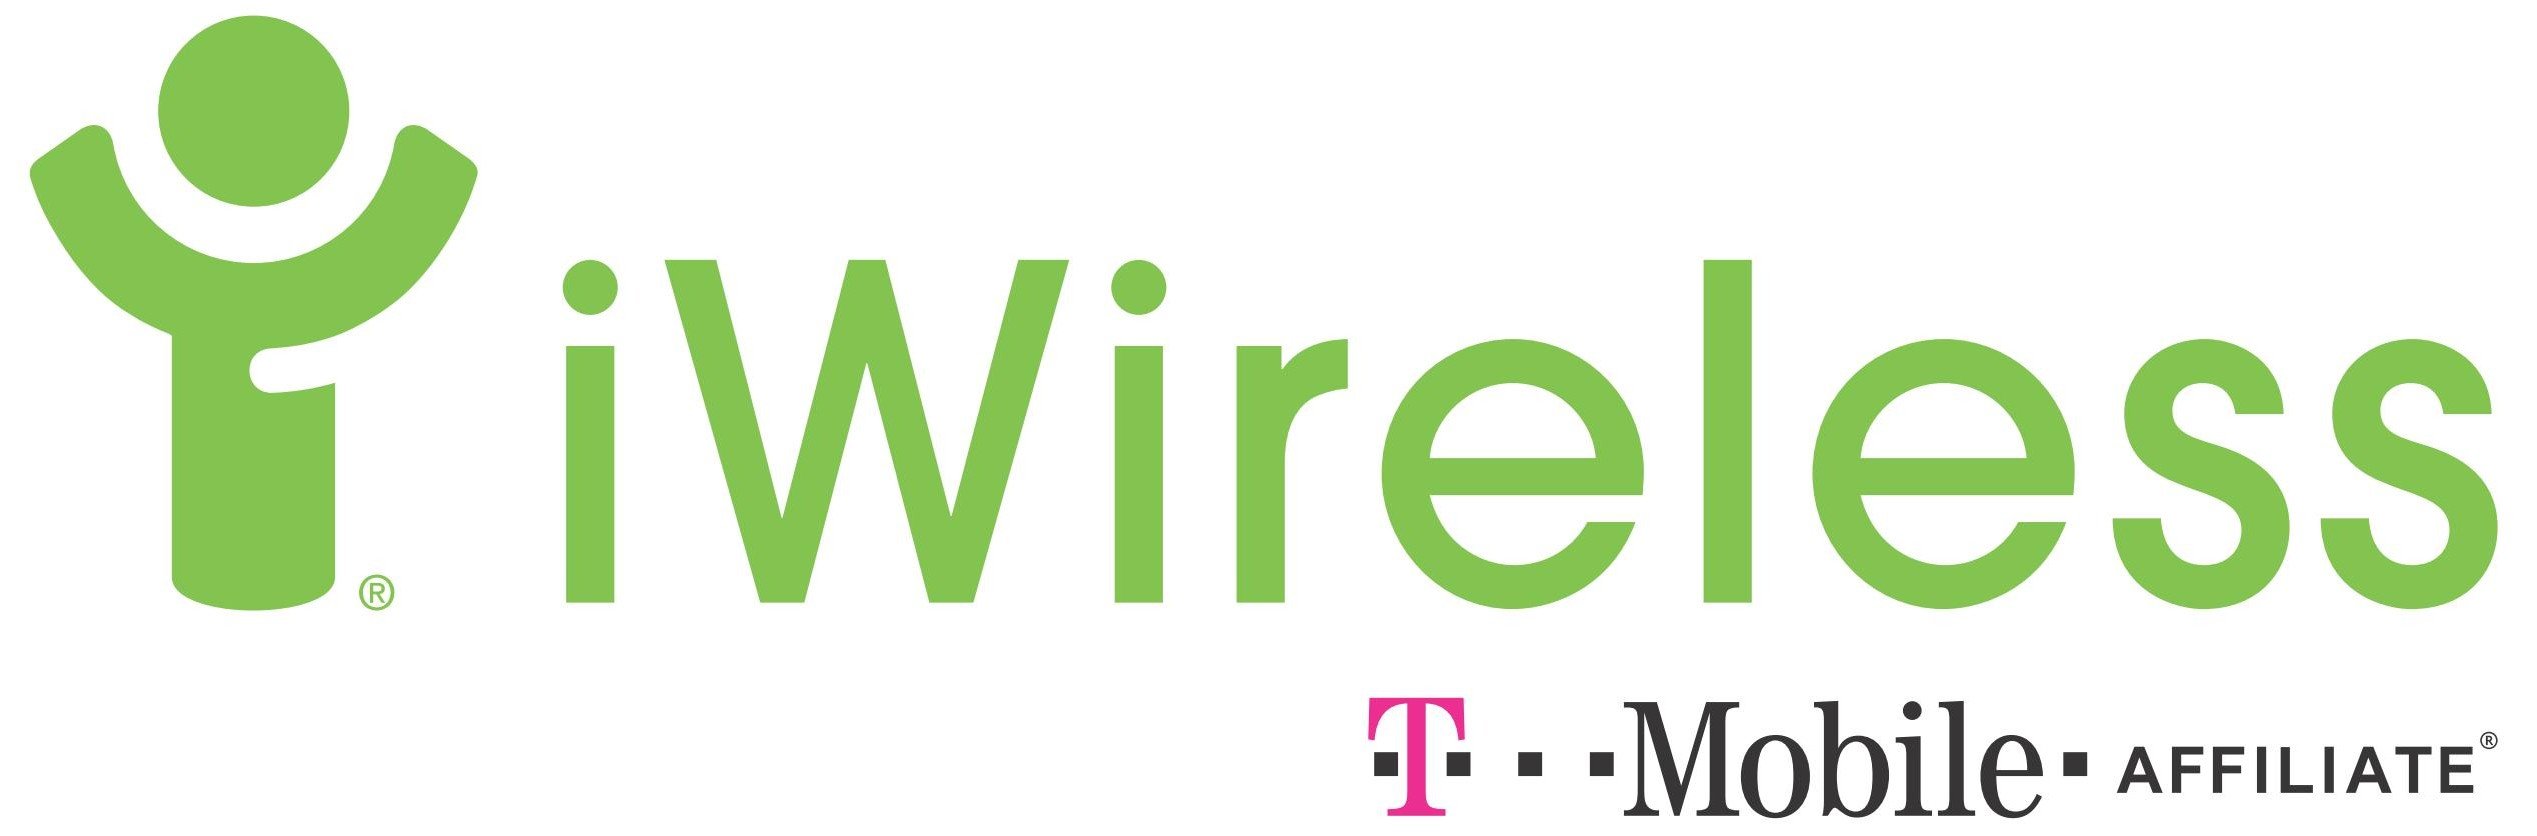 i wireless logo [EPS File] png